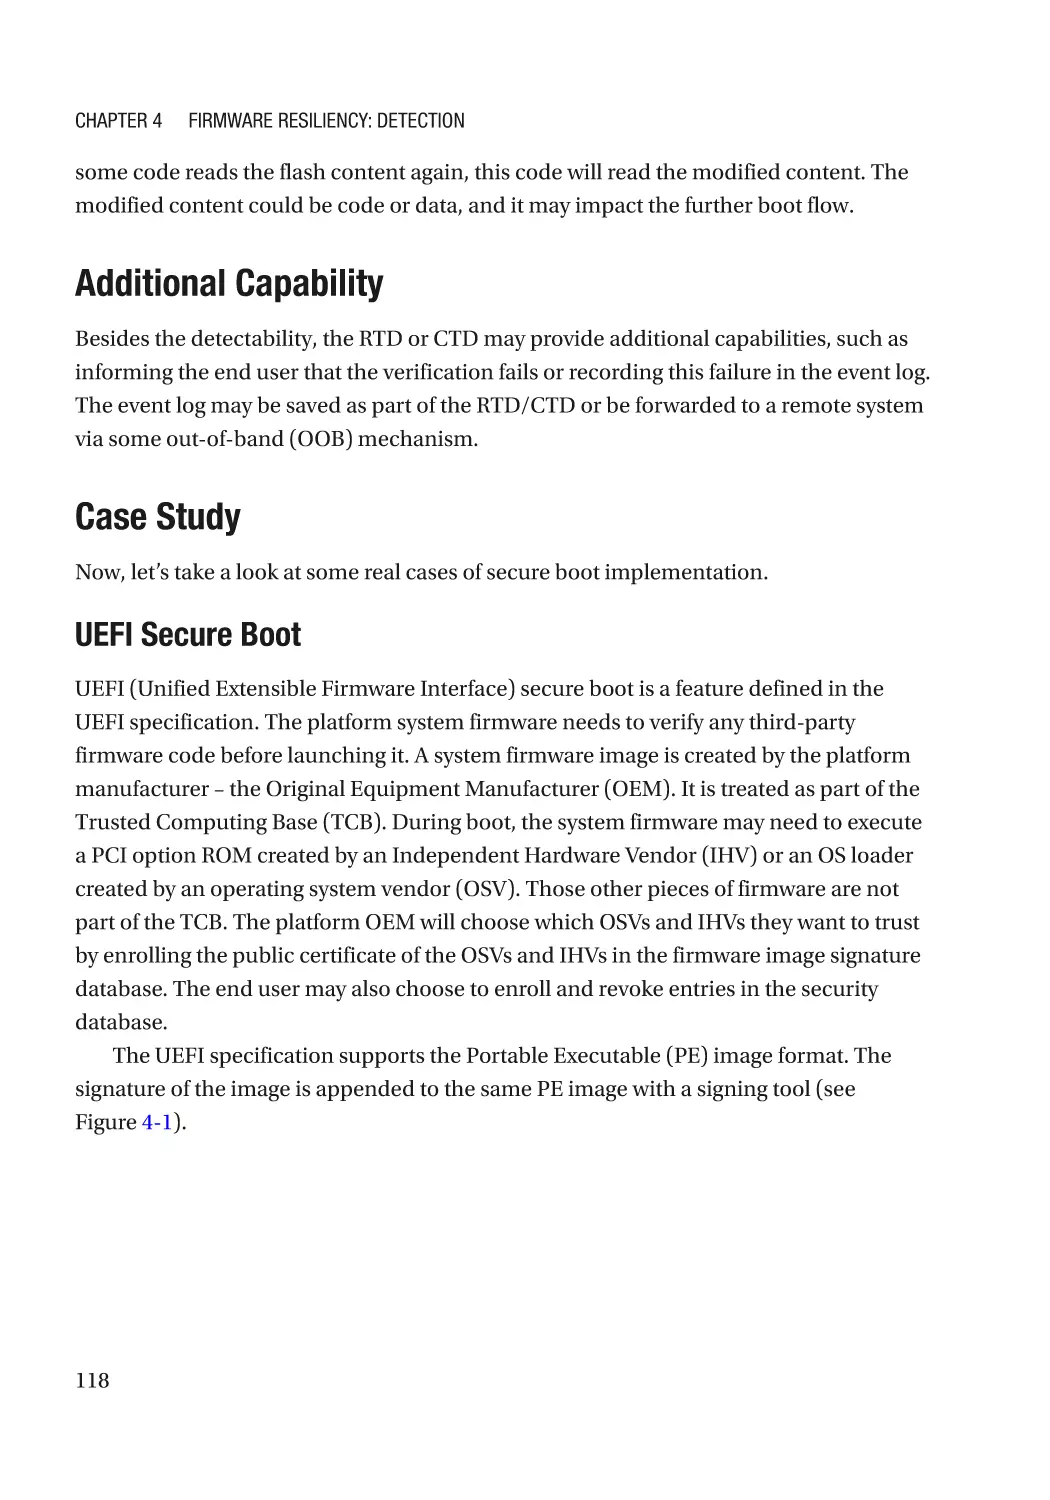 Additional Capability
Case Study
UEFI Secure Boot